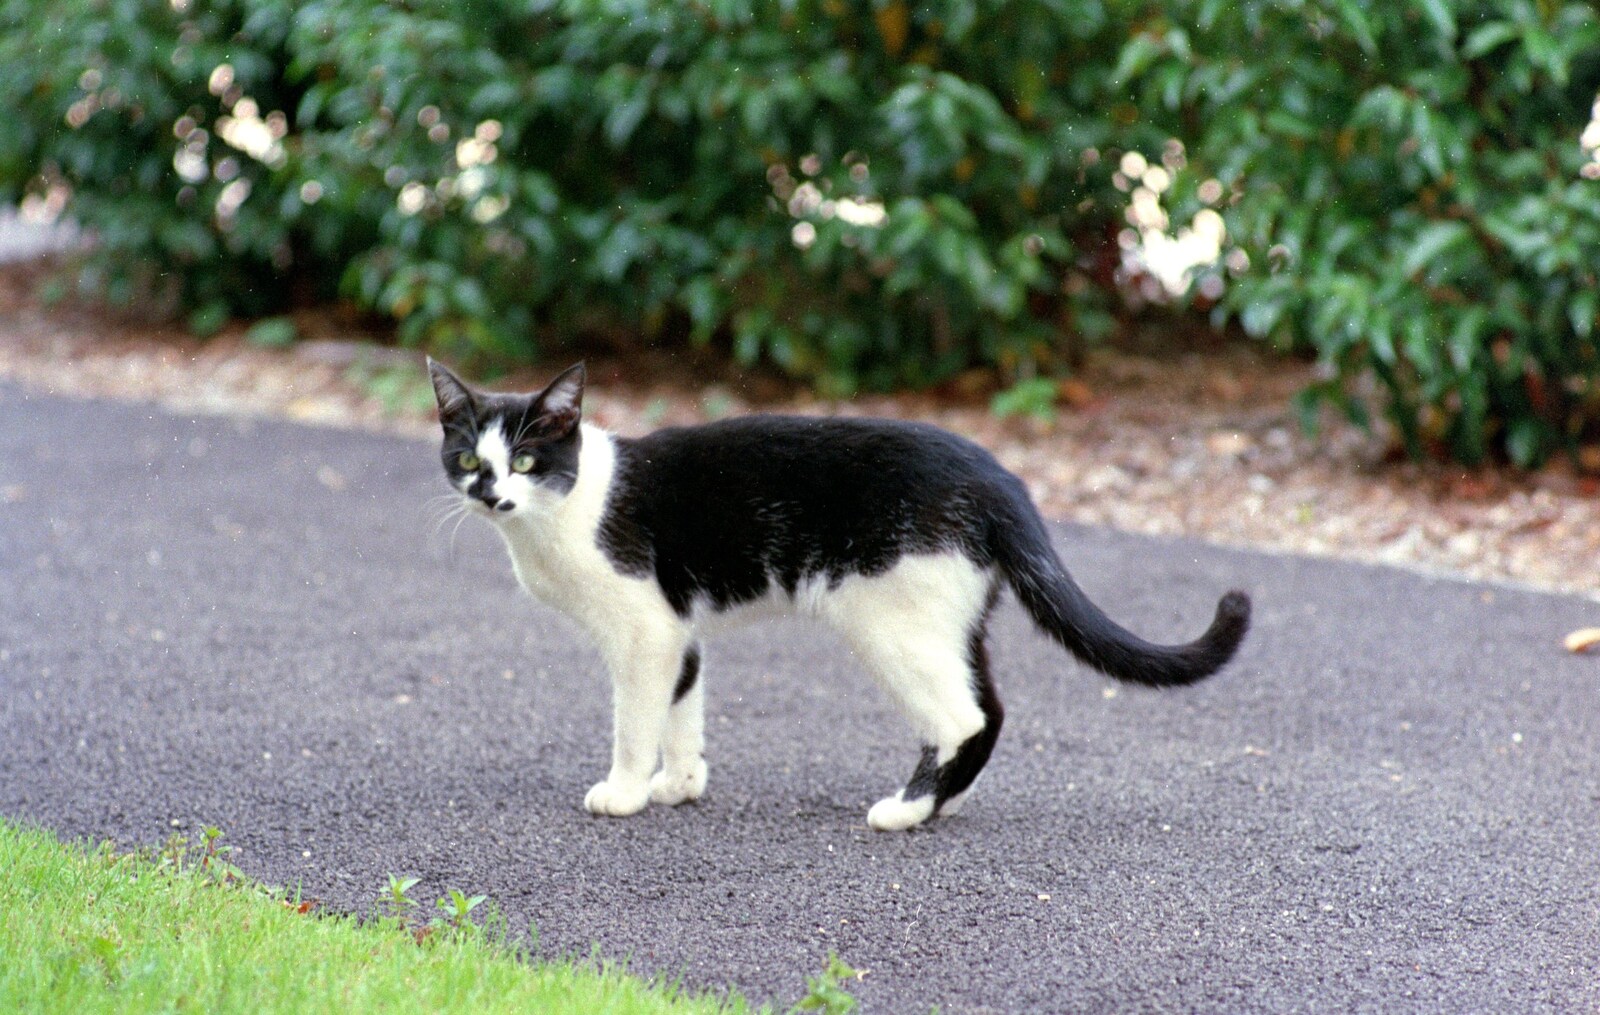 Next-door's cat from Harvester Way Randomness, Lymington, Hampshire - 19th July 1986